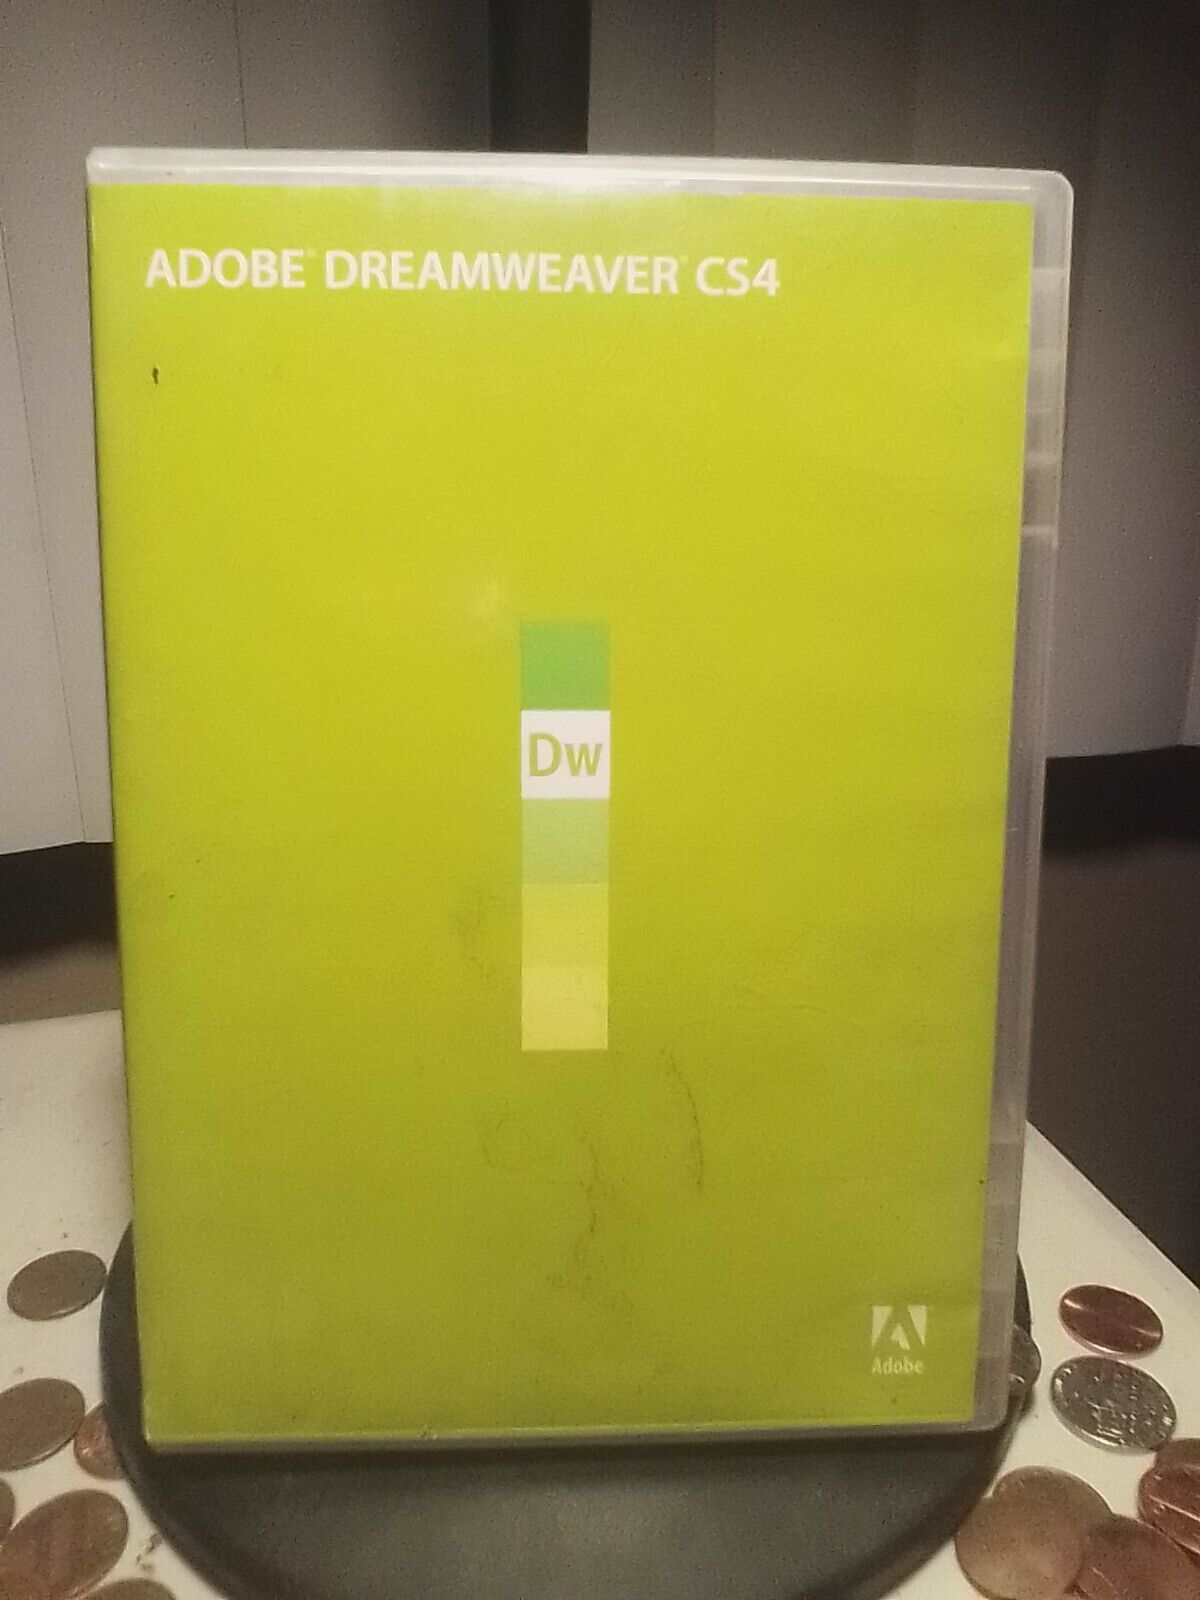 Adobe Dreamweaver Cs4 With Serial Number, Mac Os Disk